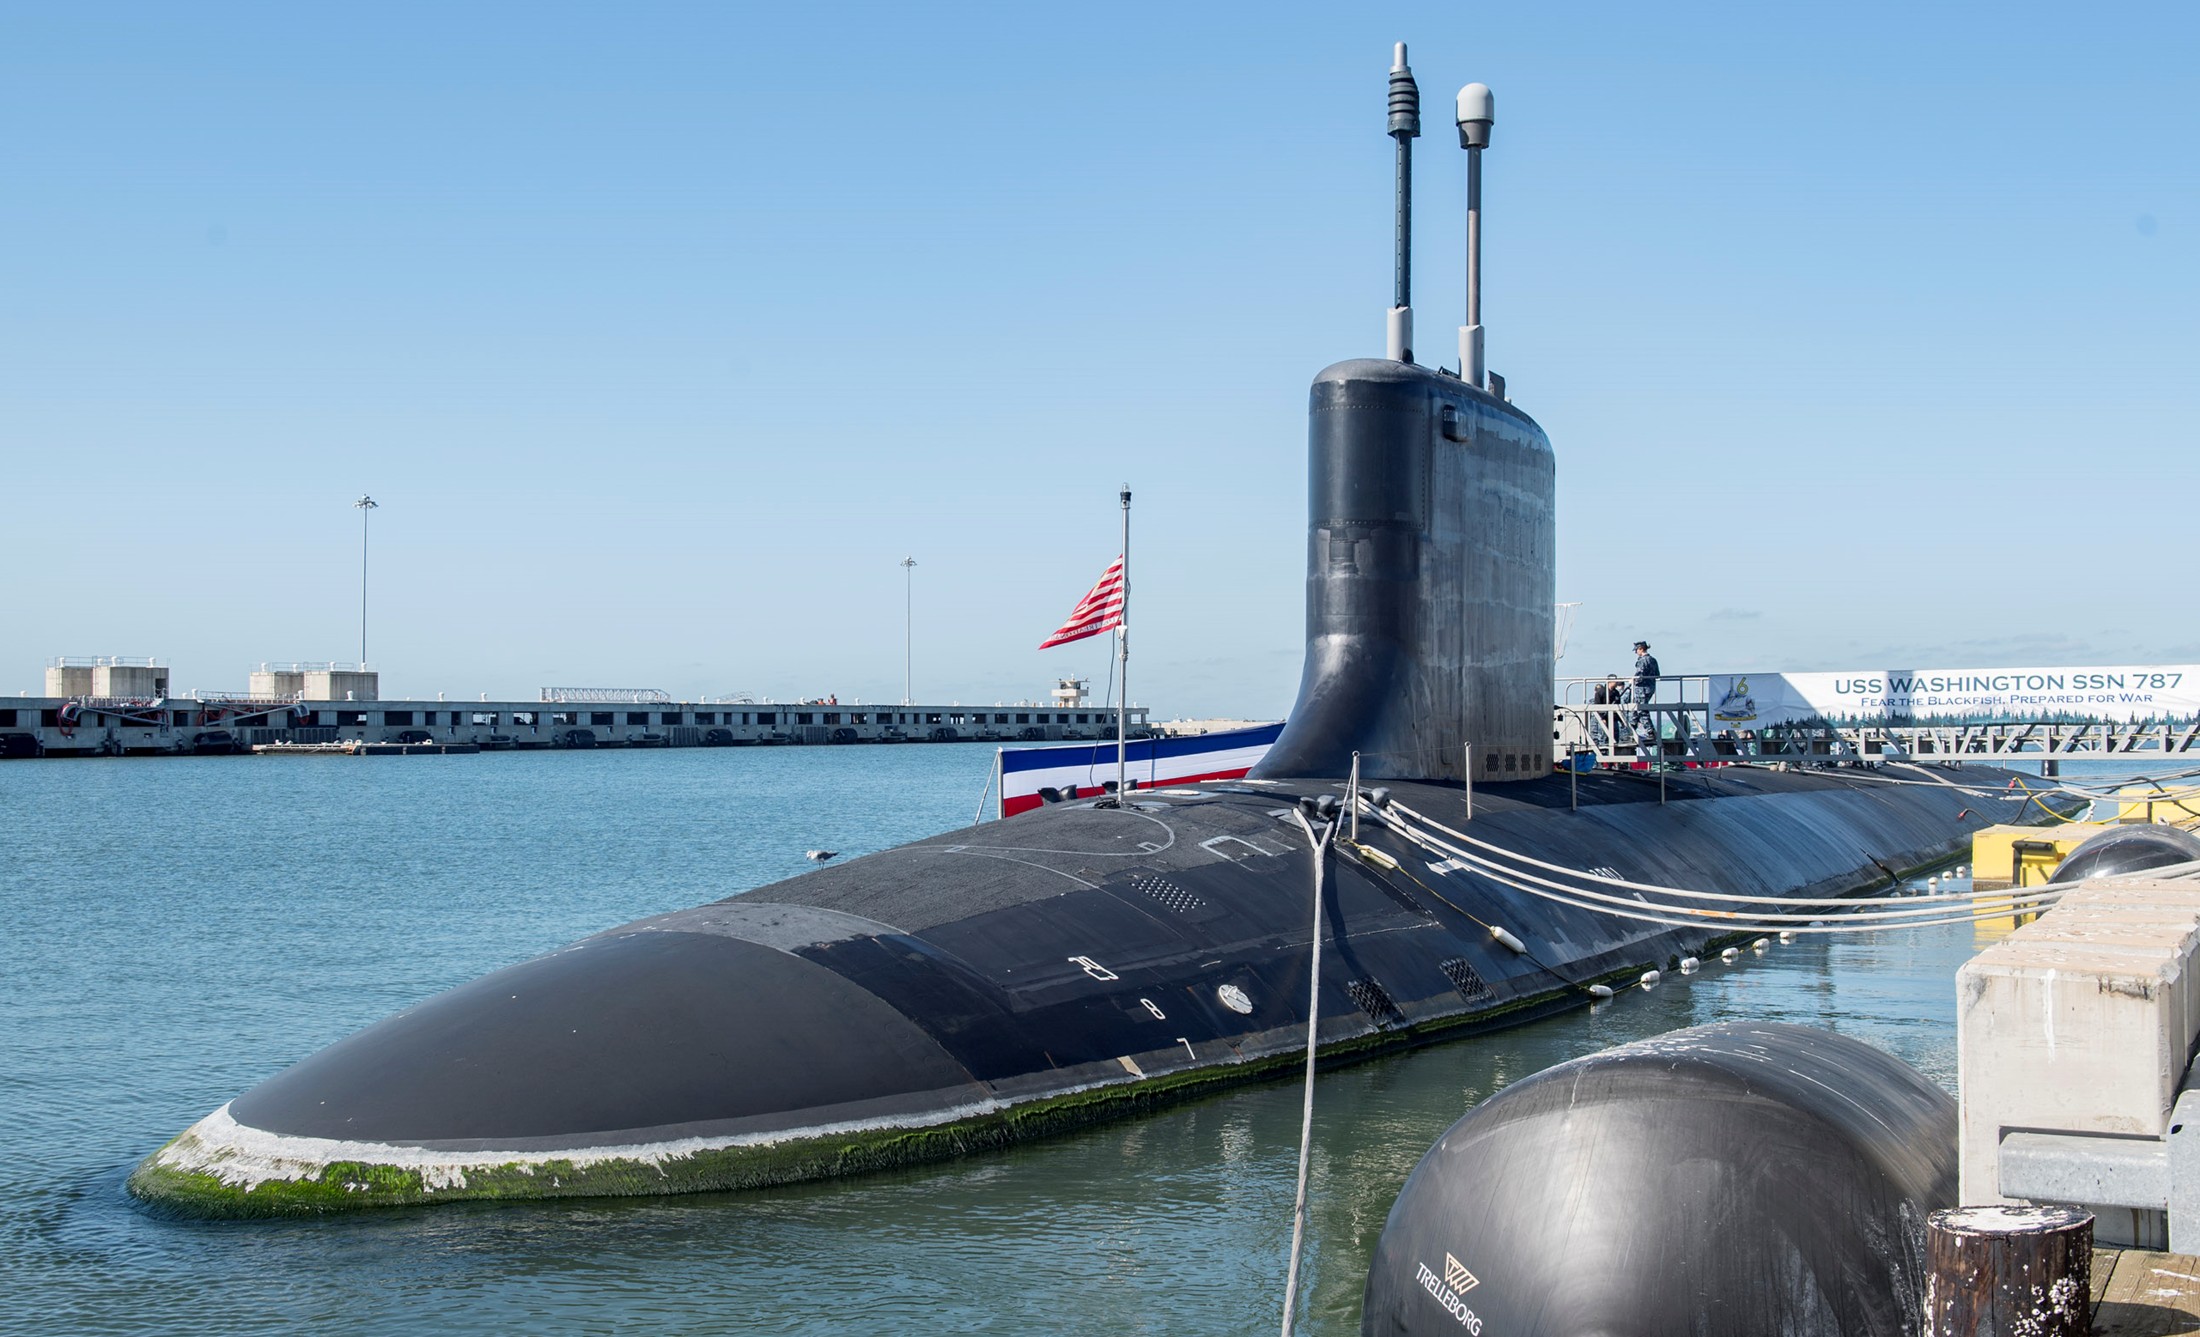 ssn-787 uss washington virginia class attack submarine us navy 07 naval station norfolk virginia